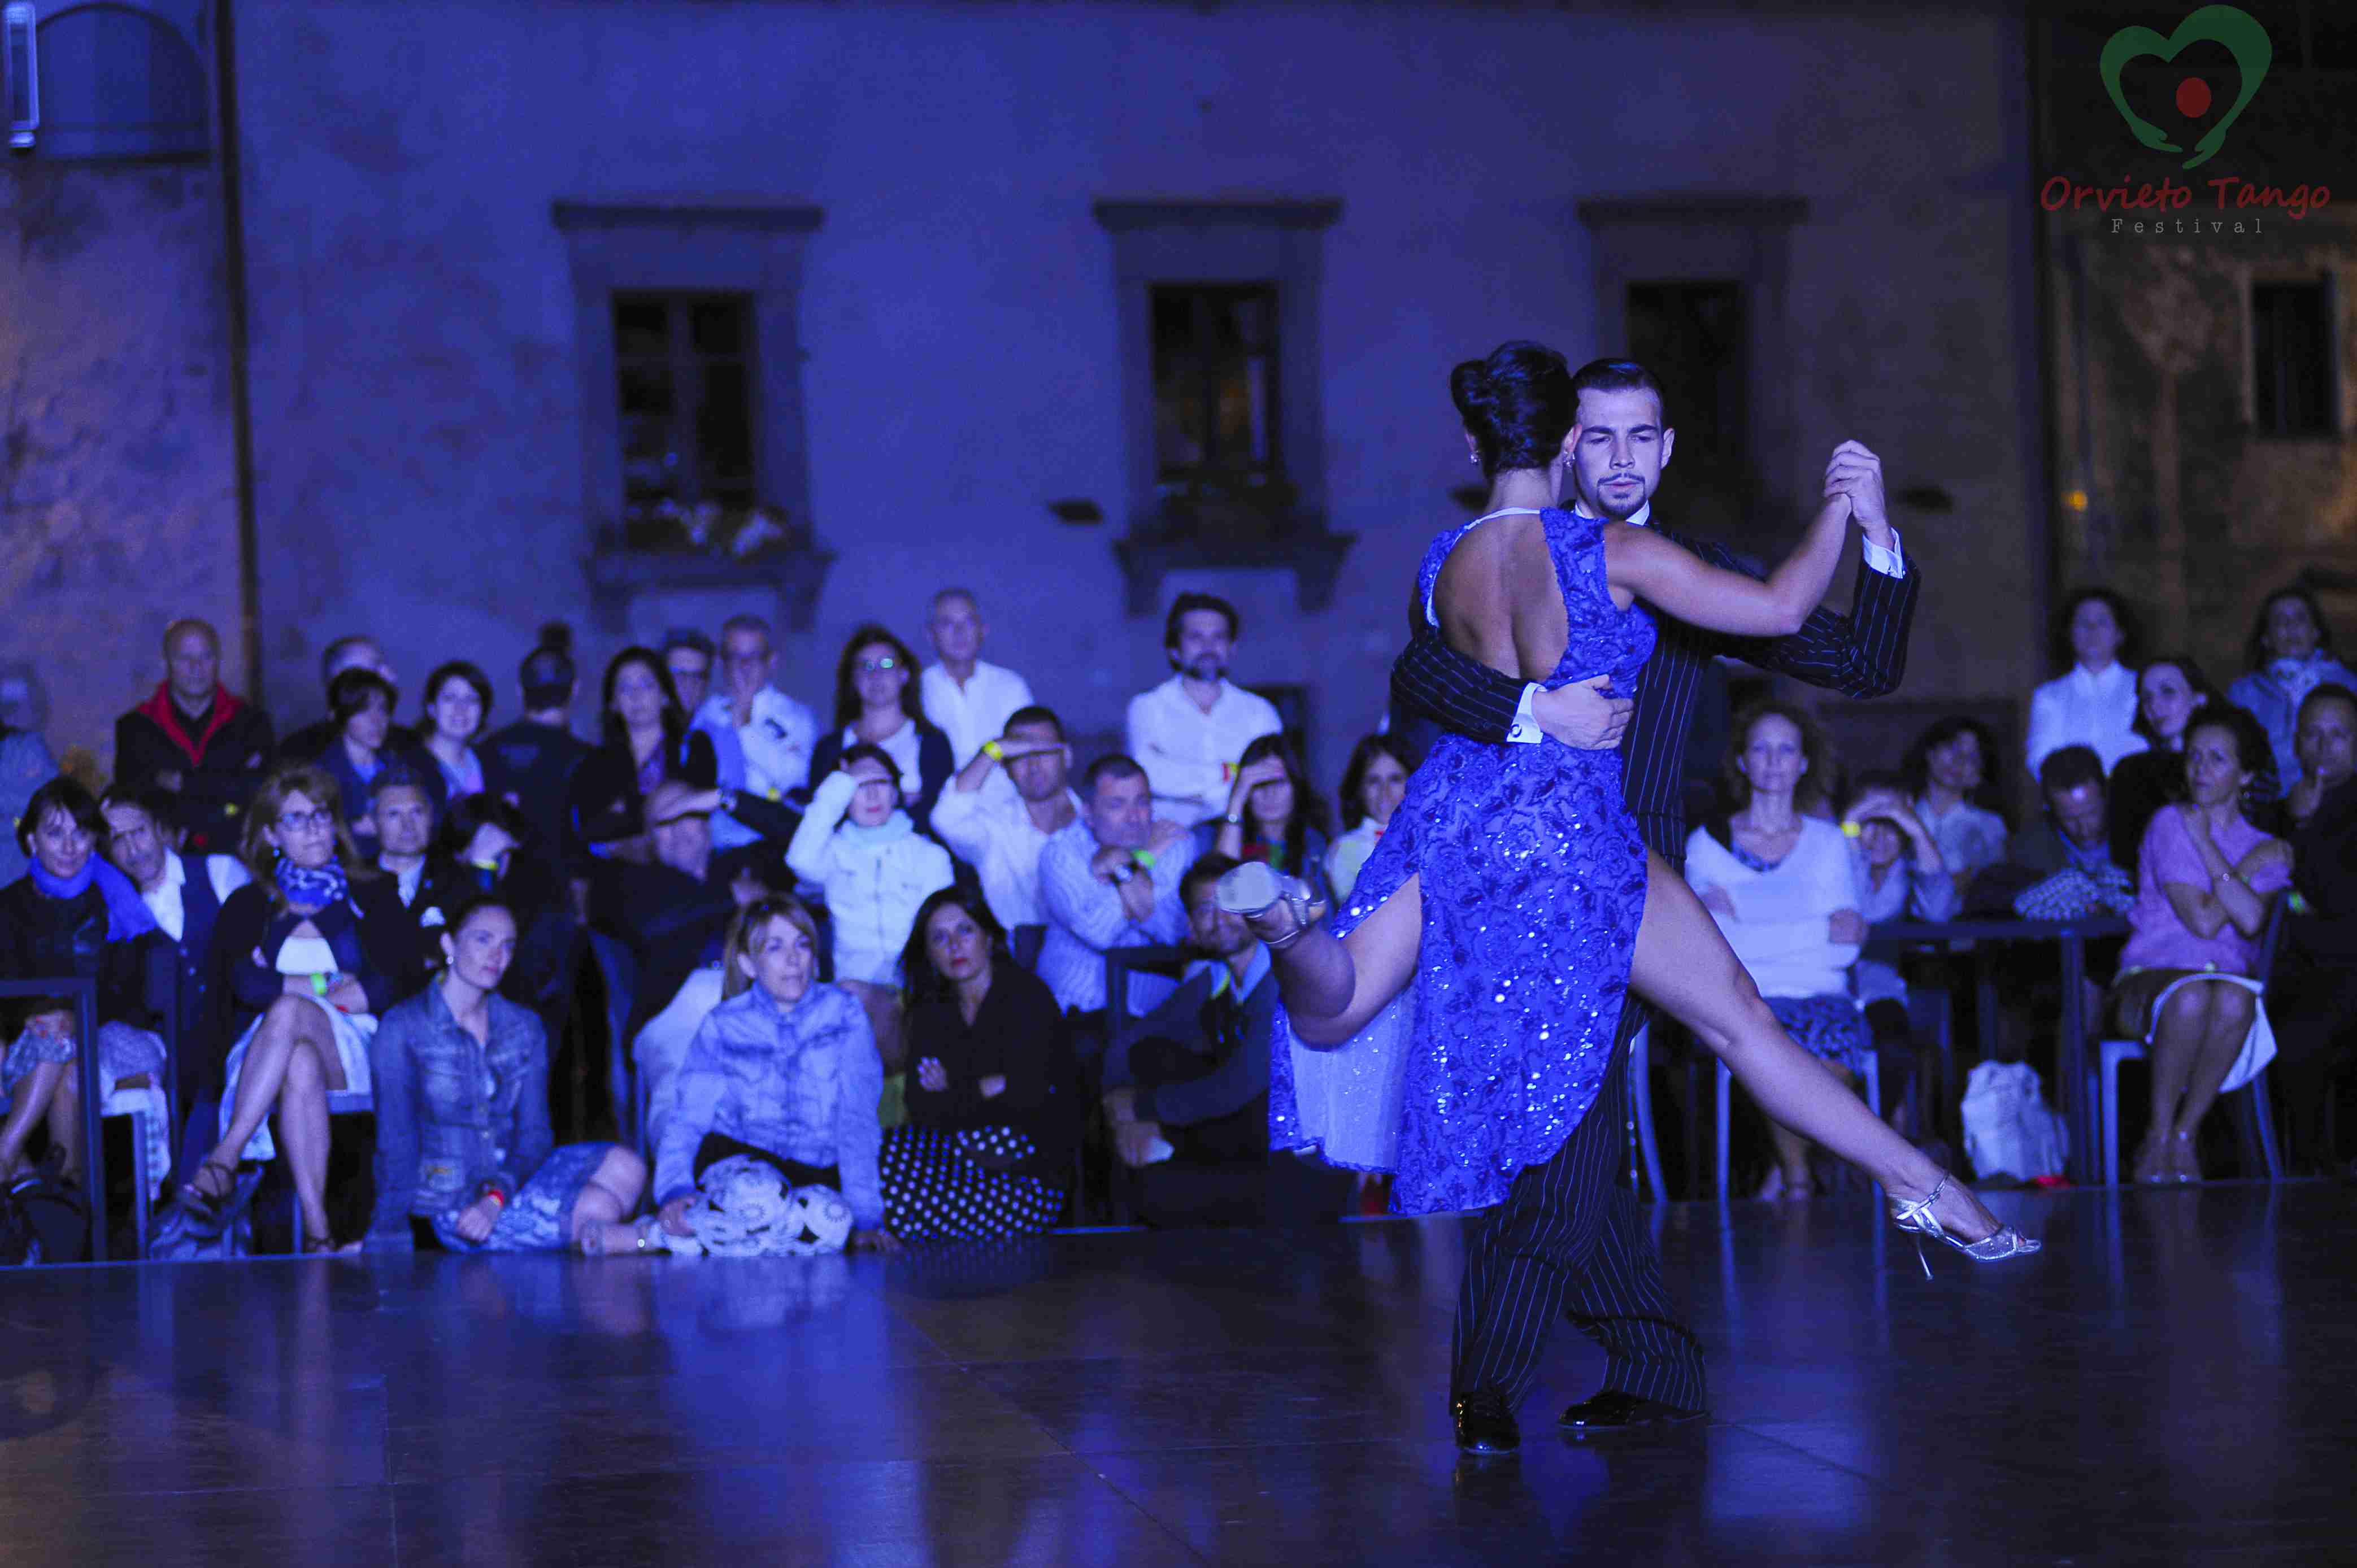 Orvieto tango festival